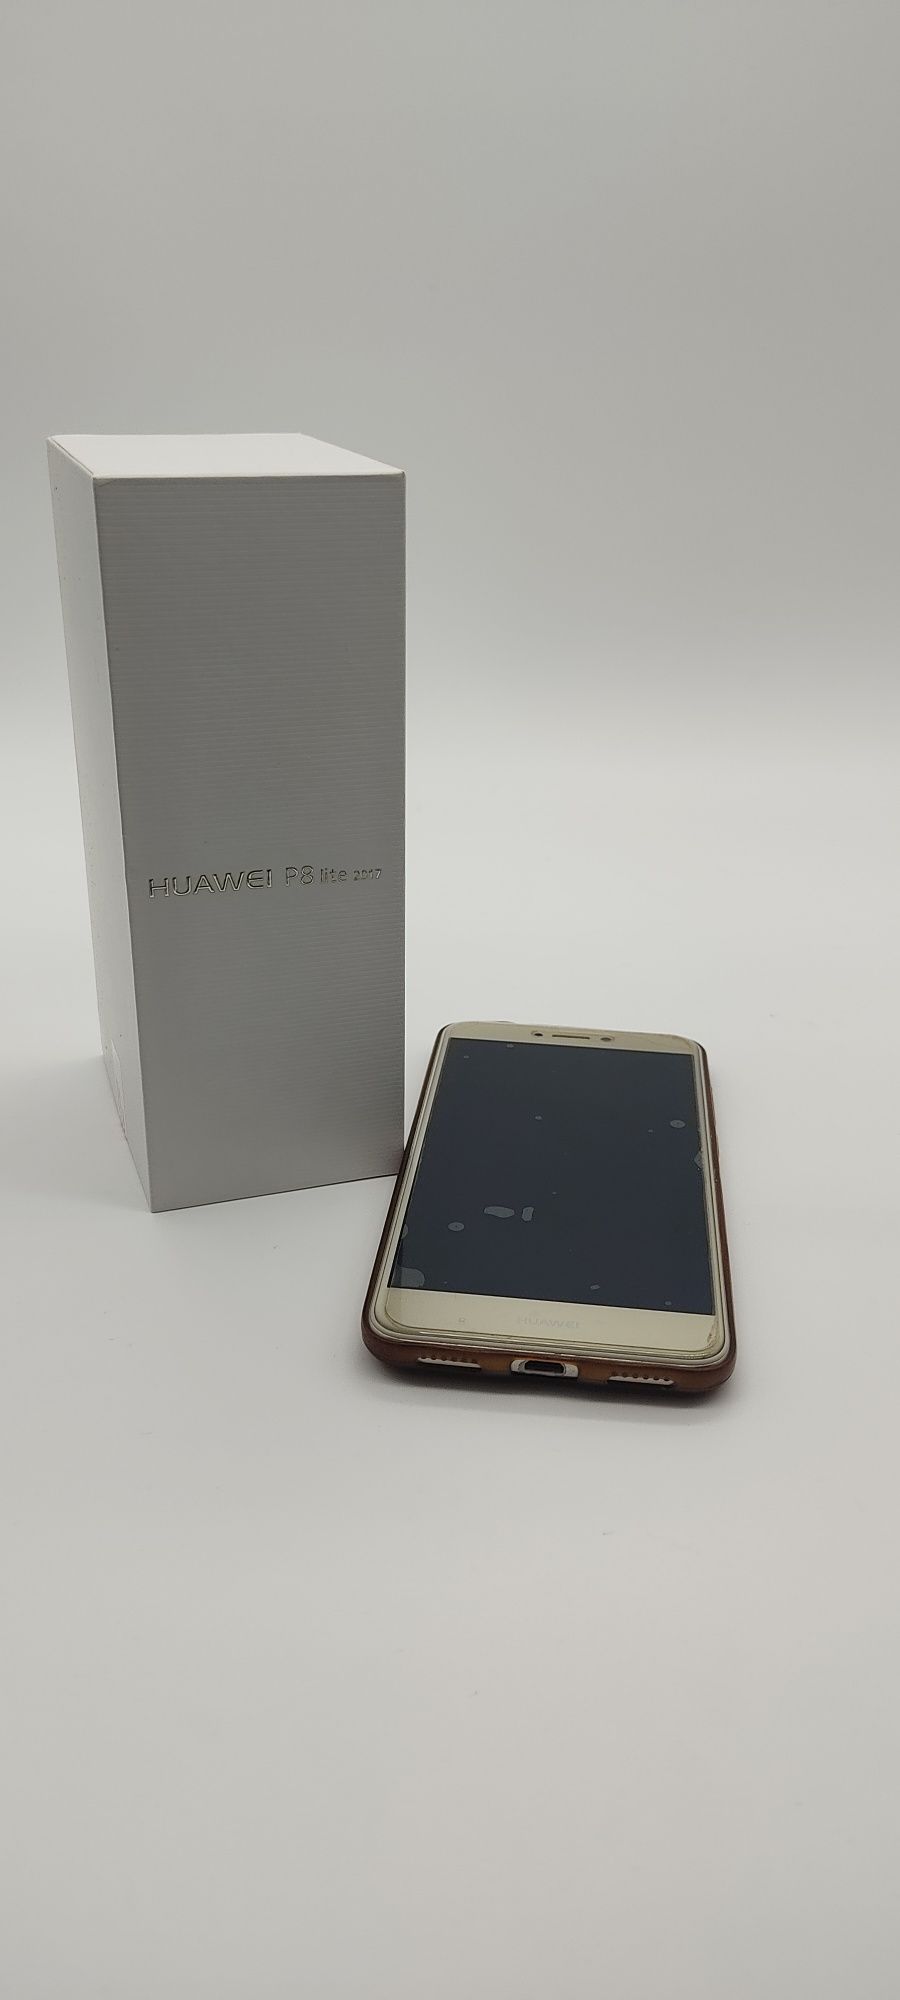 Huawei P8 Lite 2017 - Gold